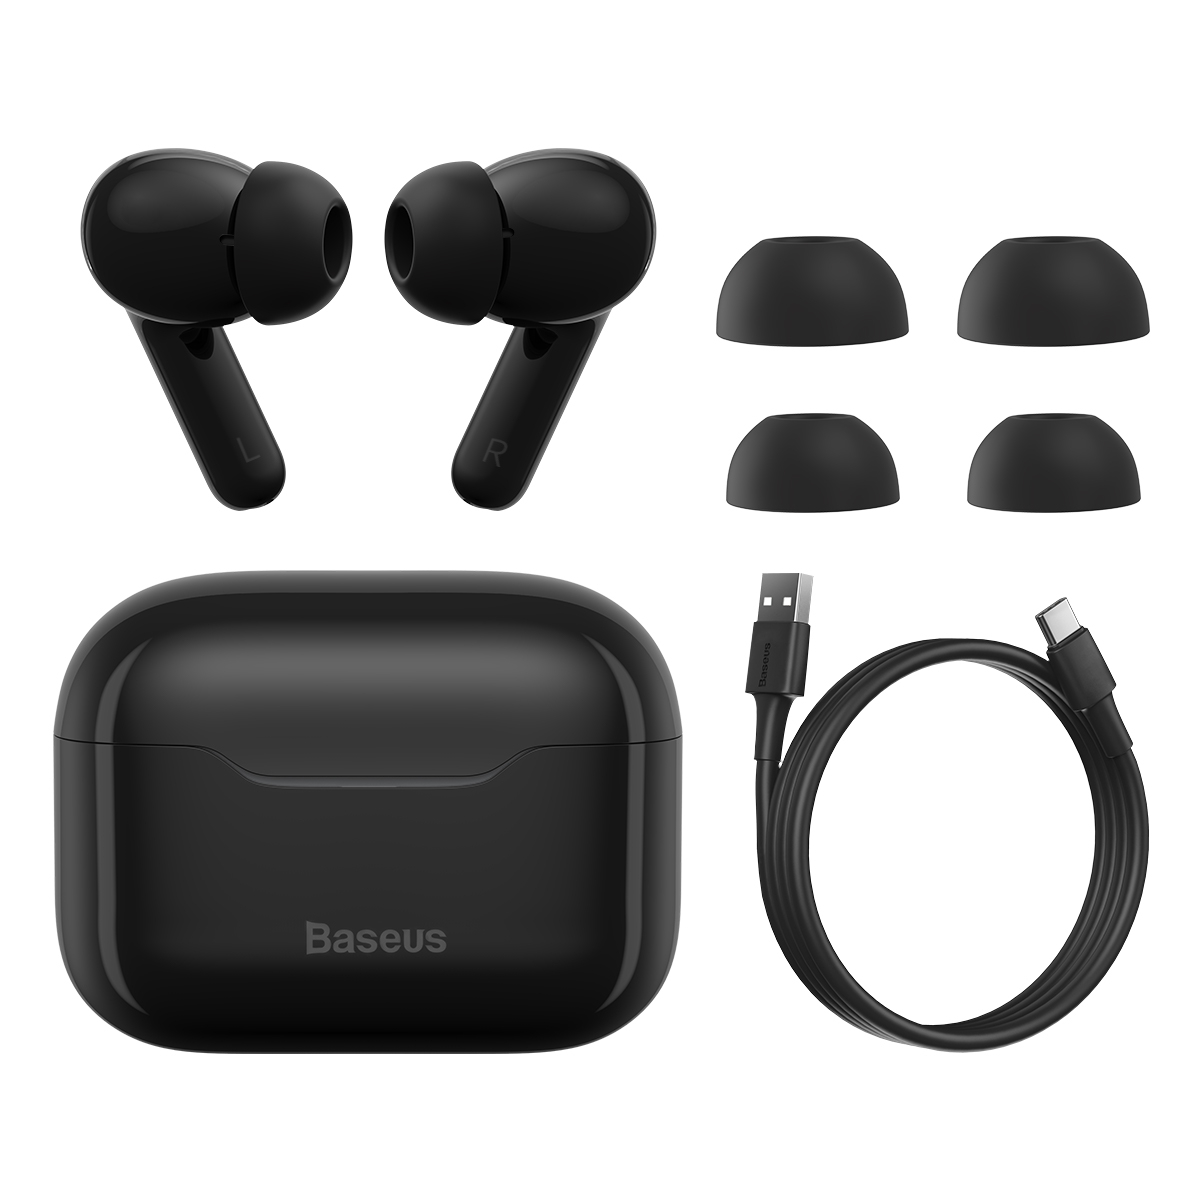 Baseus NGS1-01 S1 TWS trådlösa In Ear-hörlurar, svart